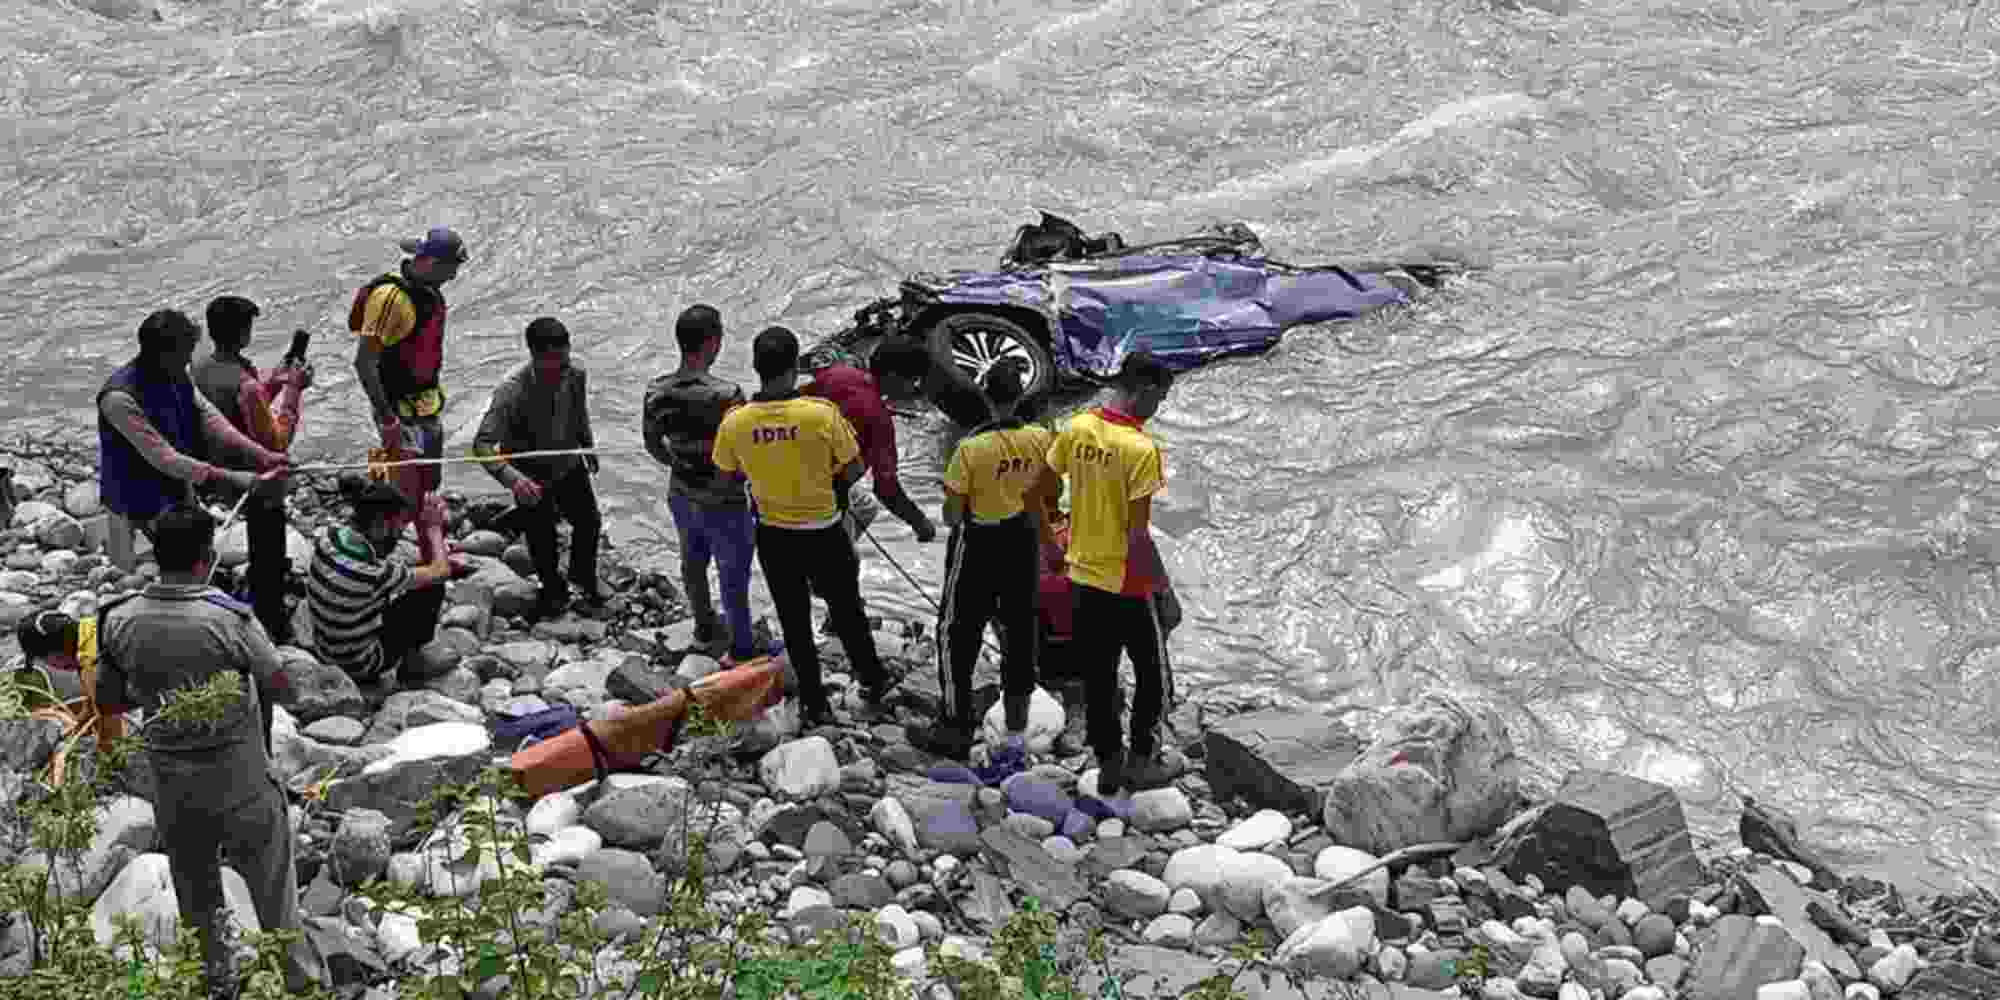 yamuna river mg hector car : MG Hector car falls in river in Uttarkashi 2 people missing